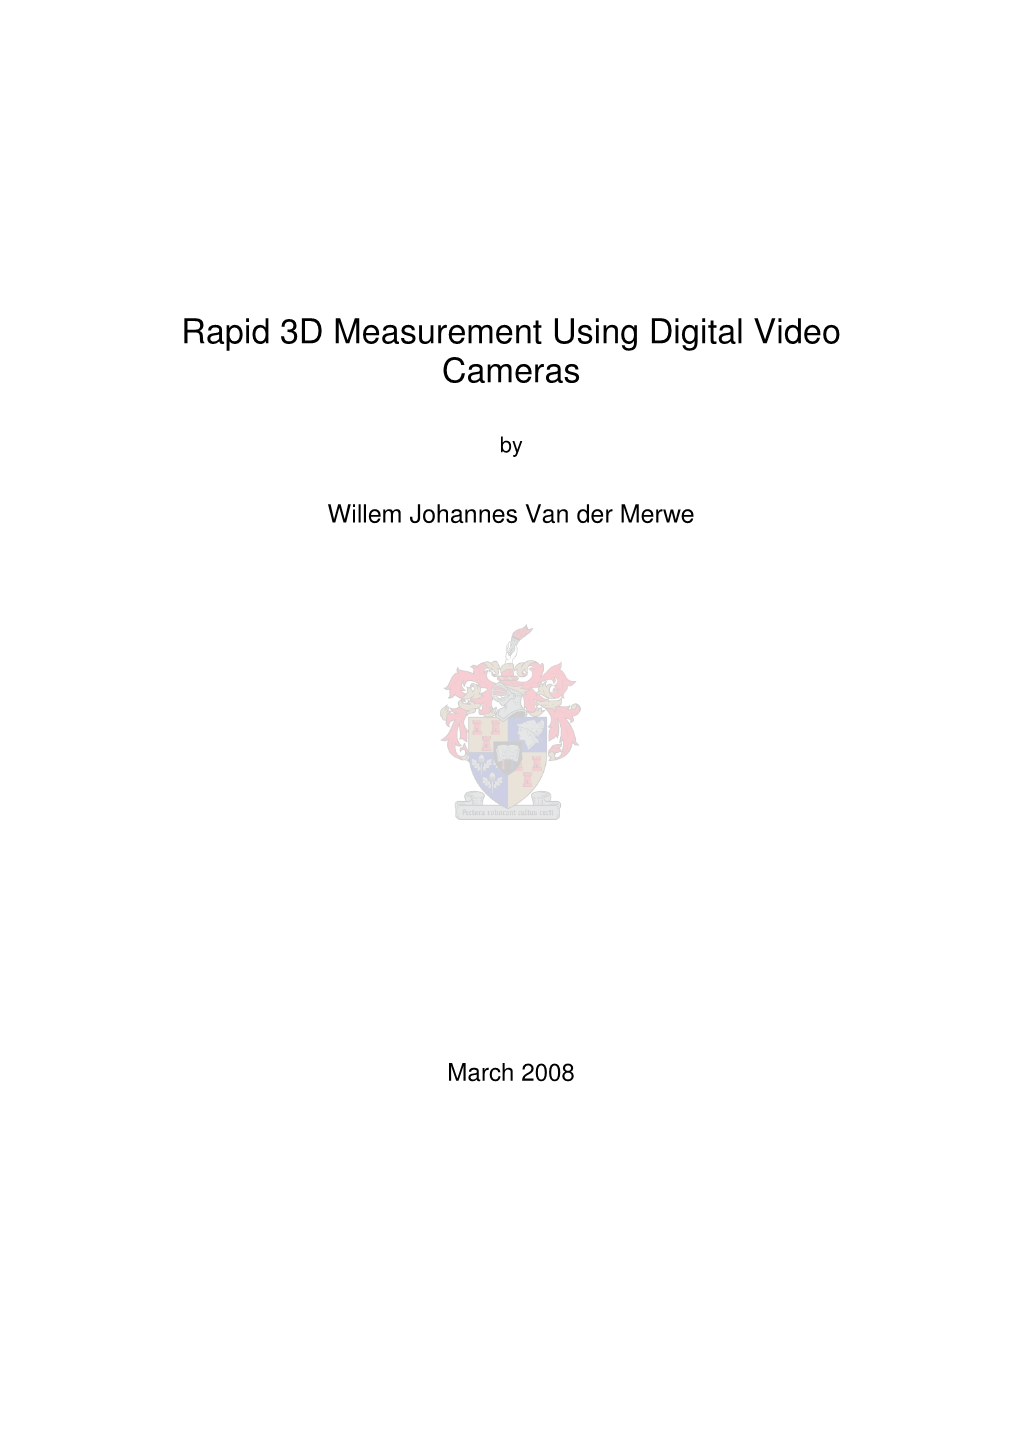 Rapid 3D Measurement Using Digital Video Cameras